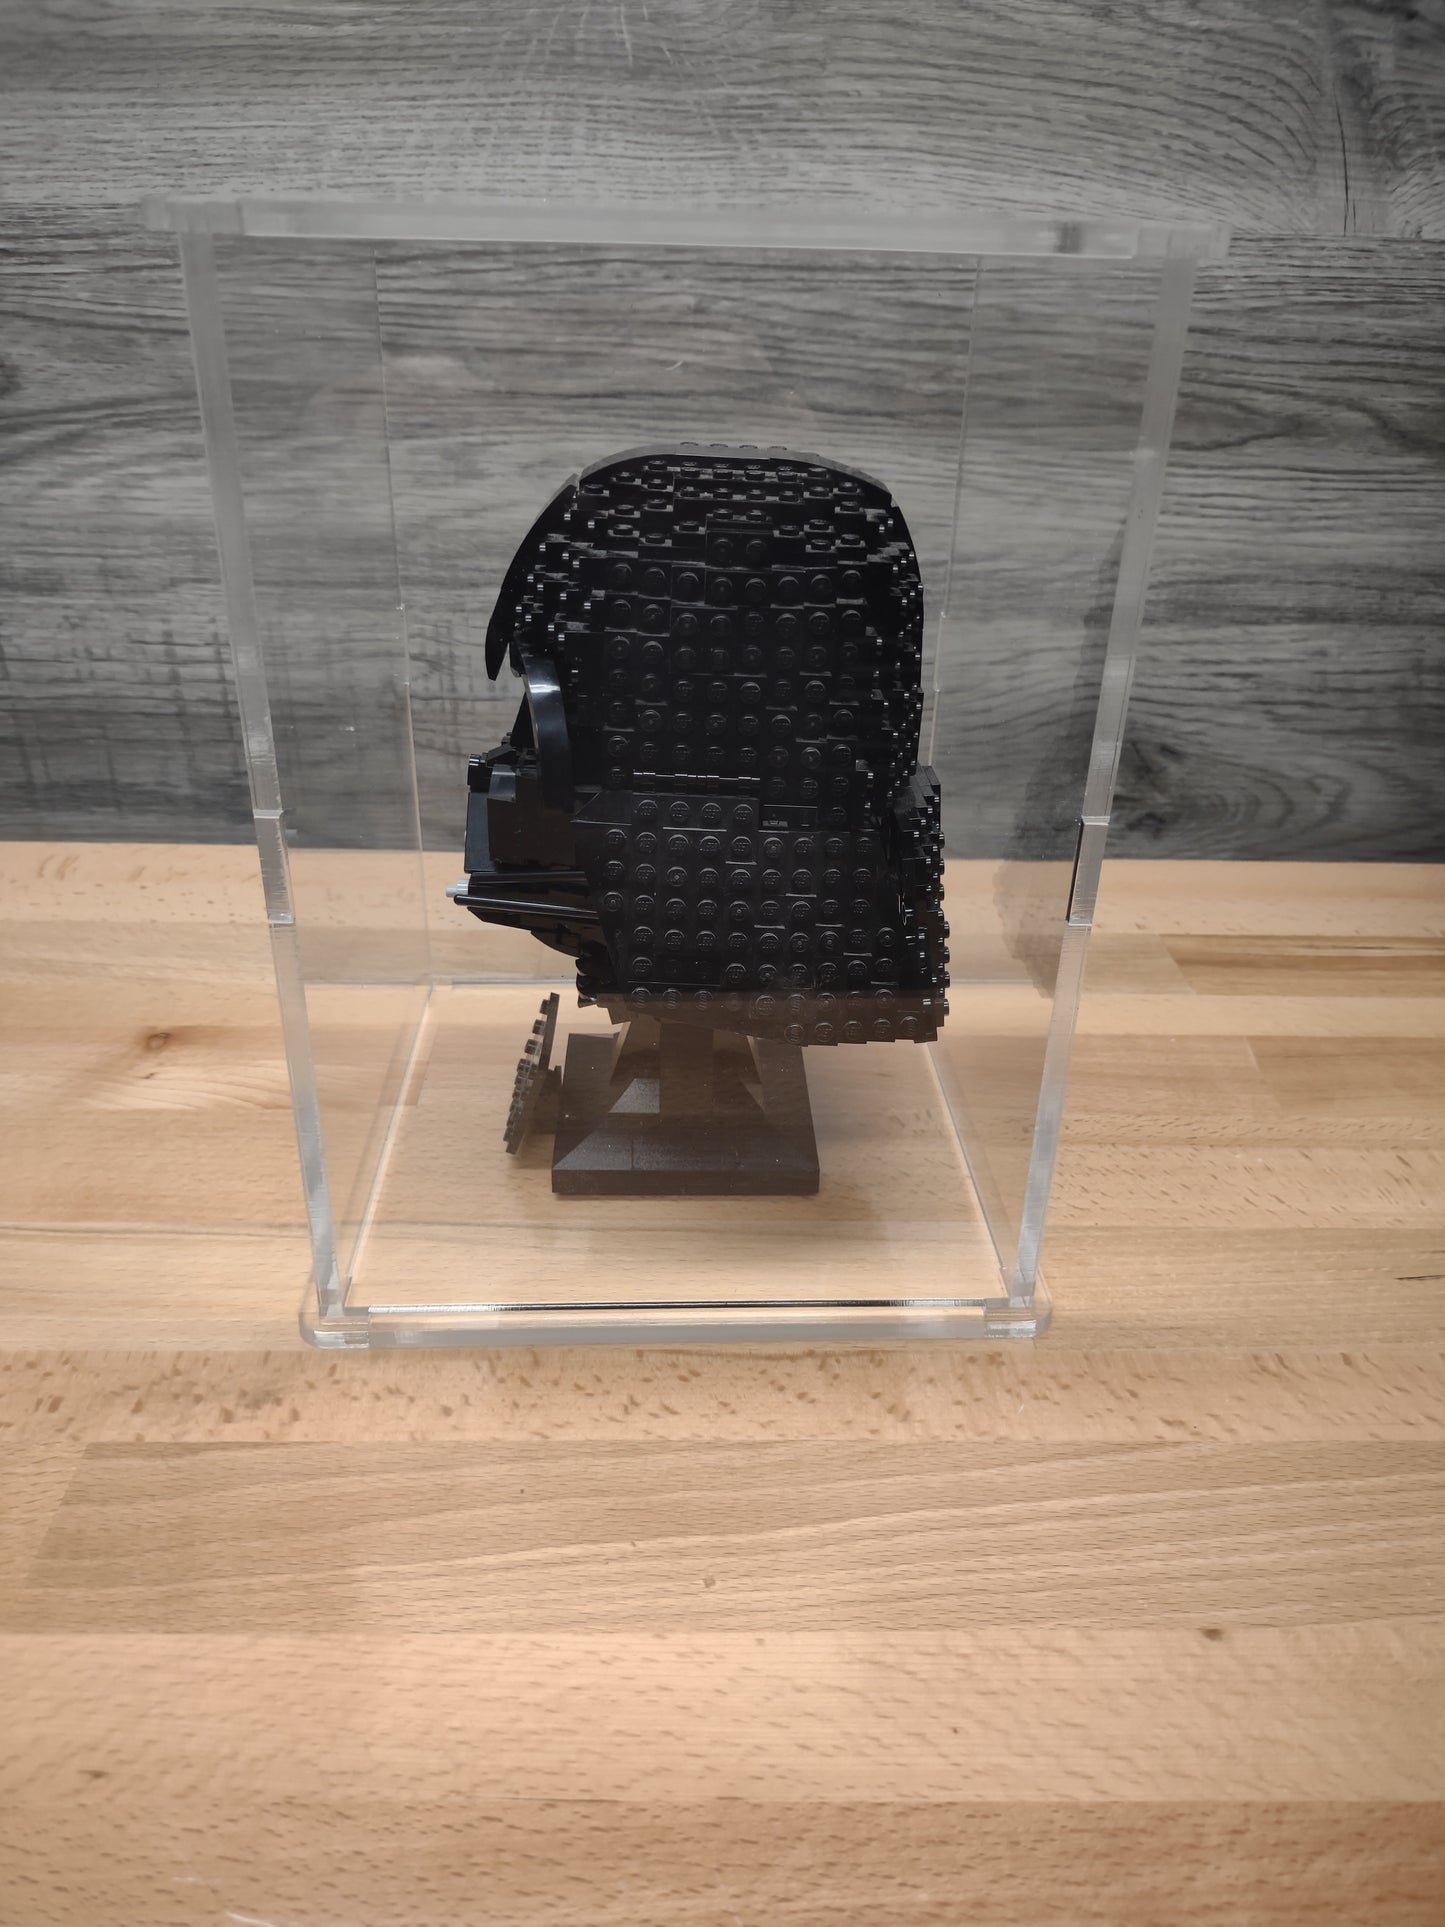 Lego helmet display case side view